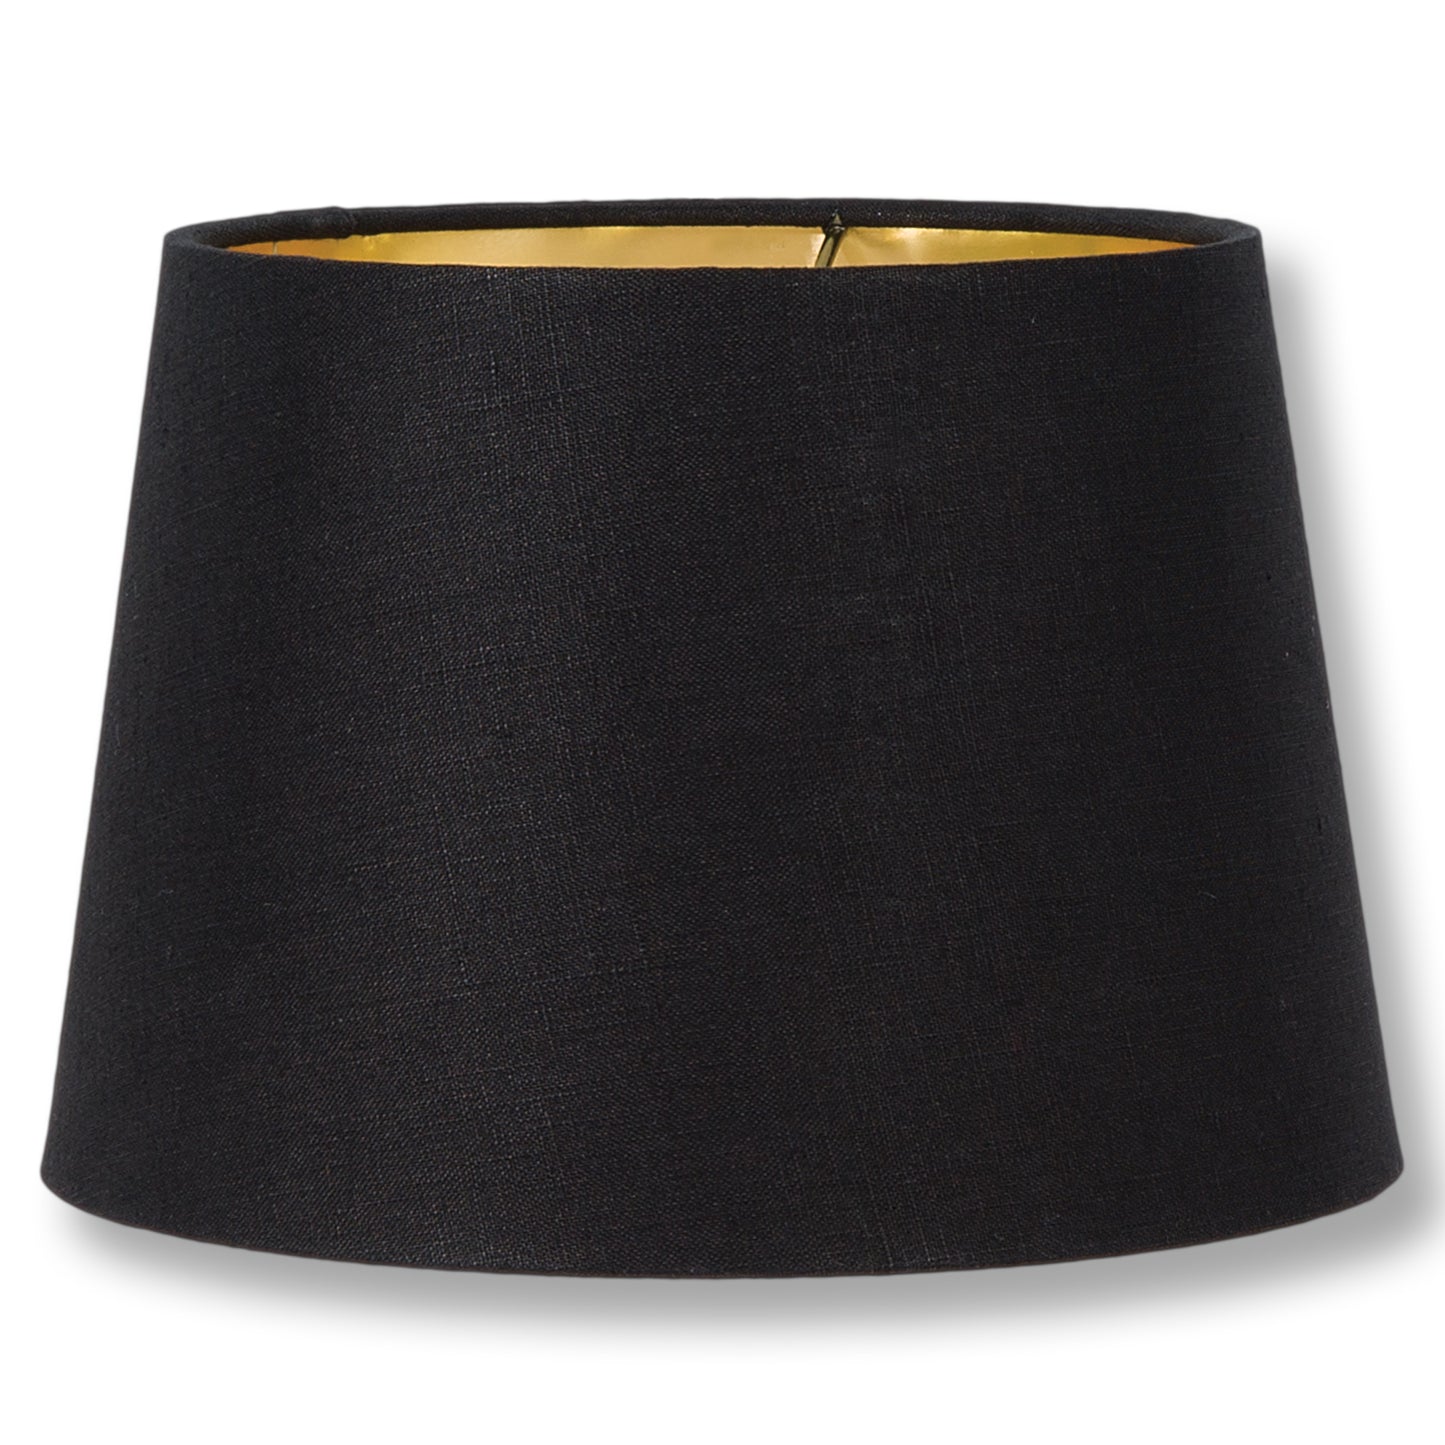 Retro Drum Lamp Shades - Black Color, 100% Fine Linen Material, Gold Foil Lining (07227N)